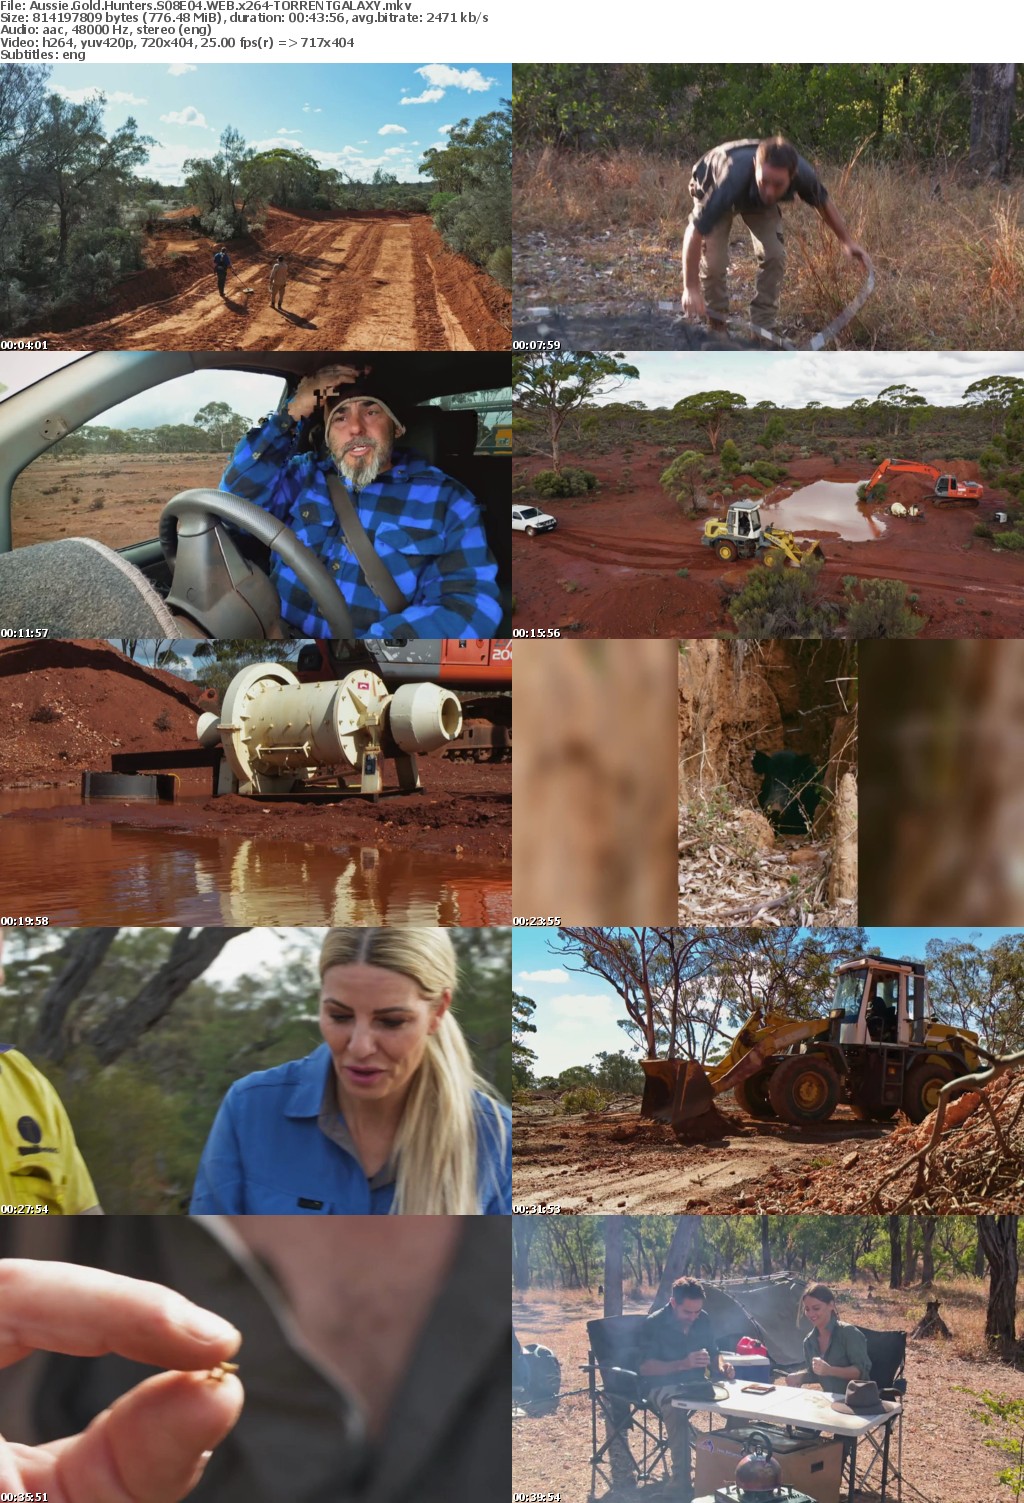 Aussie Gold Hunters S08E04 WEB x264-GALAXY